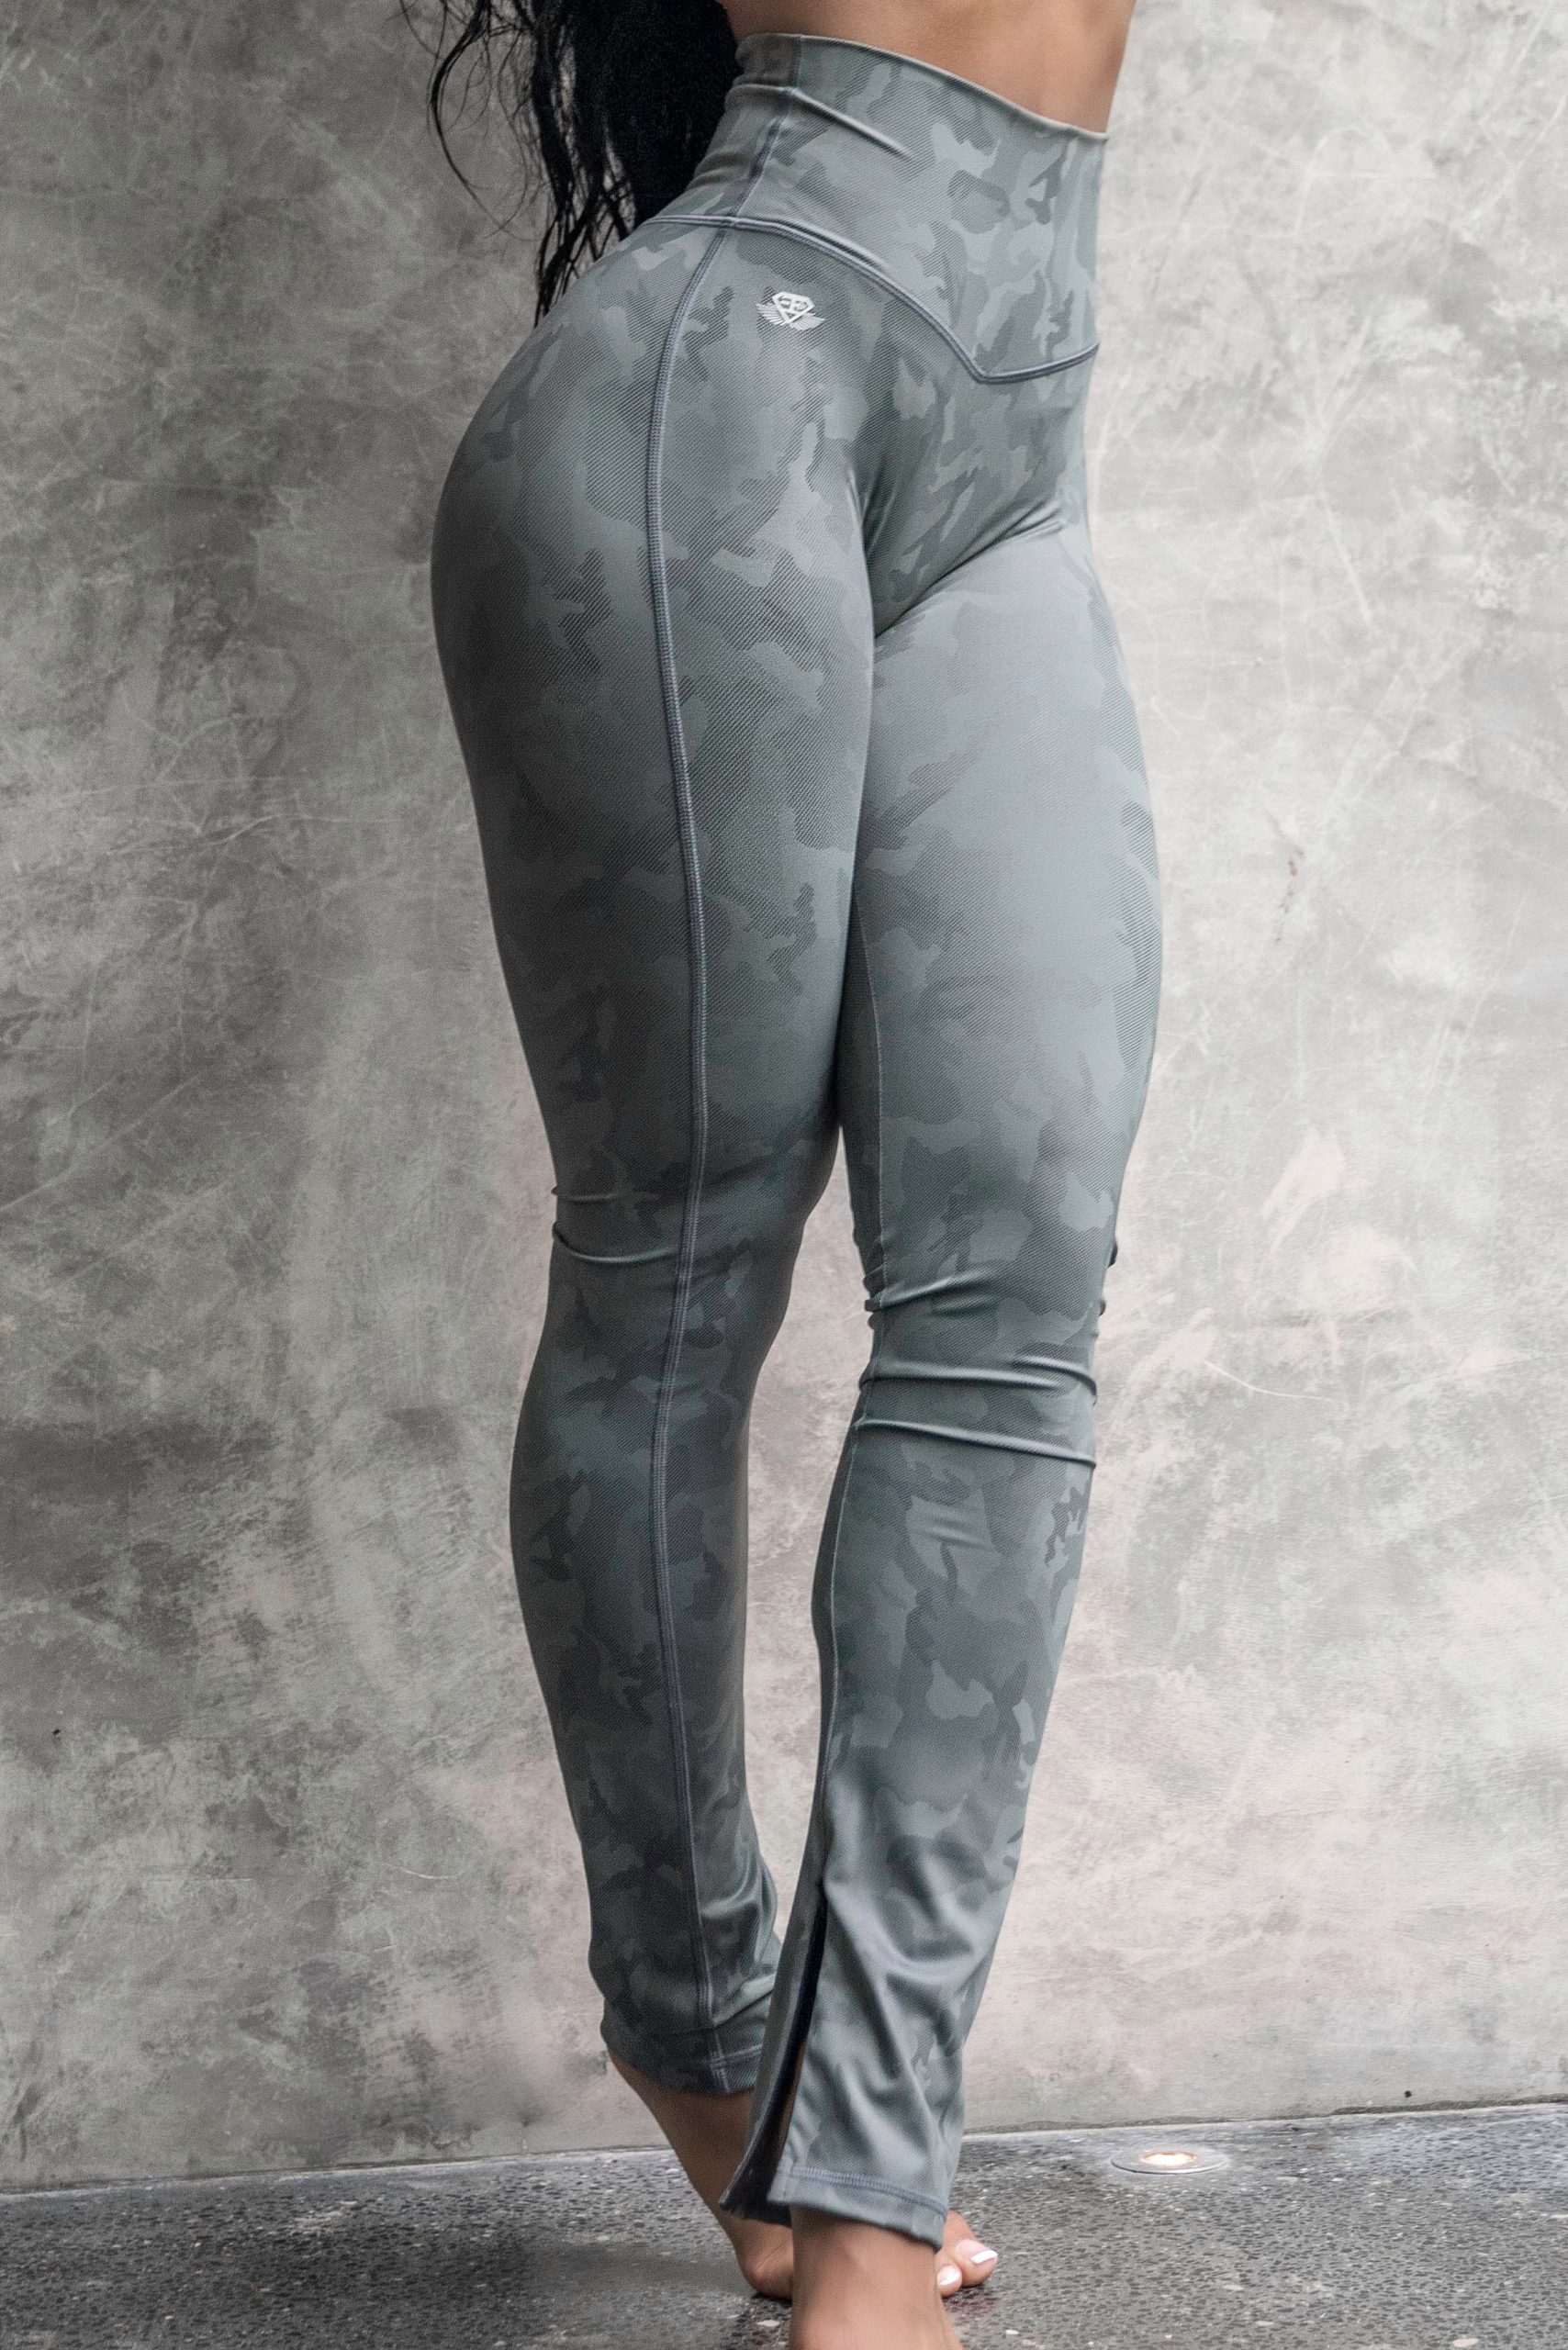 NERISSA TECH Legging - Light Grey Camo - Engineered Life